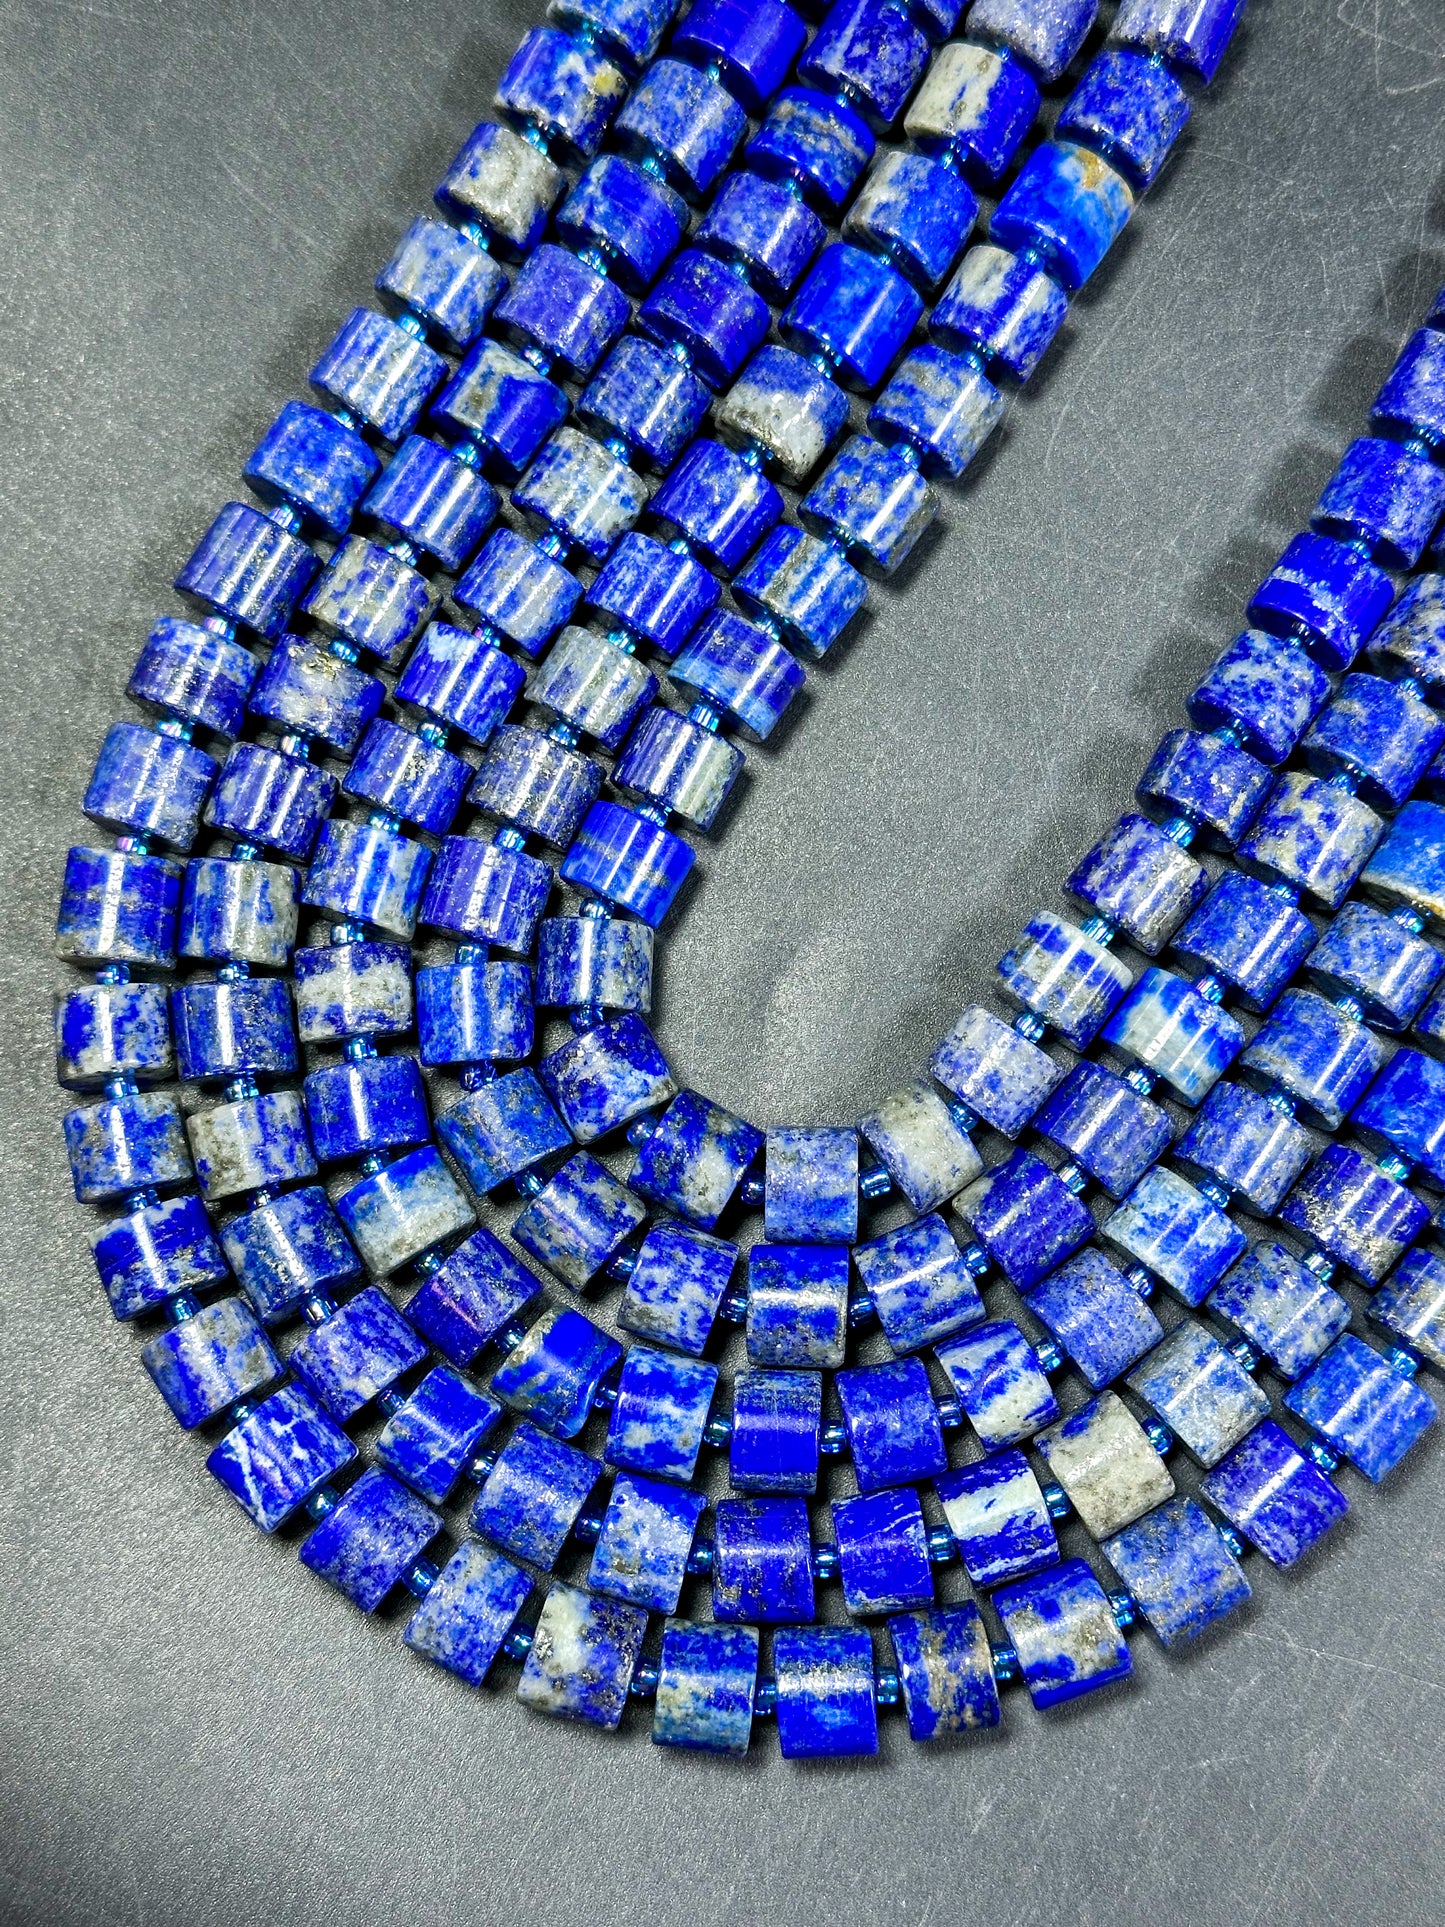 NATURAL Lapis Lazuli Gemstone Bead 10mm Rondelle Cylinder Wheel Shape, Gorgeous Natural Blue Color Lapis Lazuli Gemstone Beads Great Quality